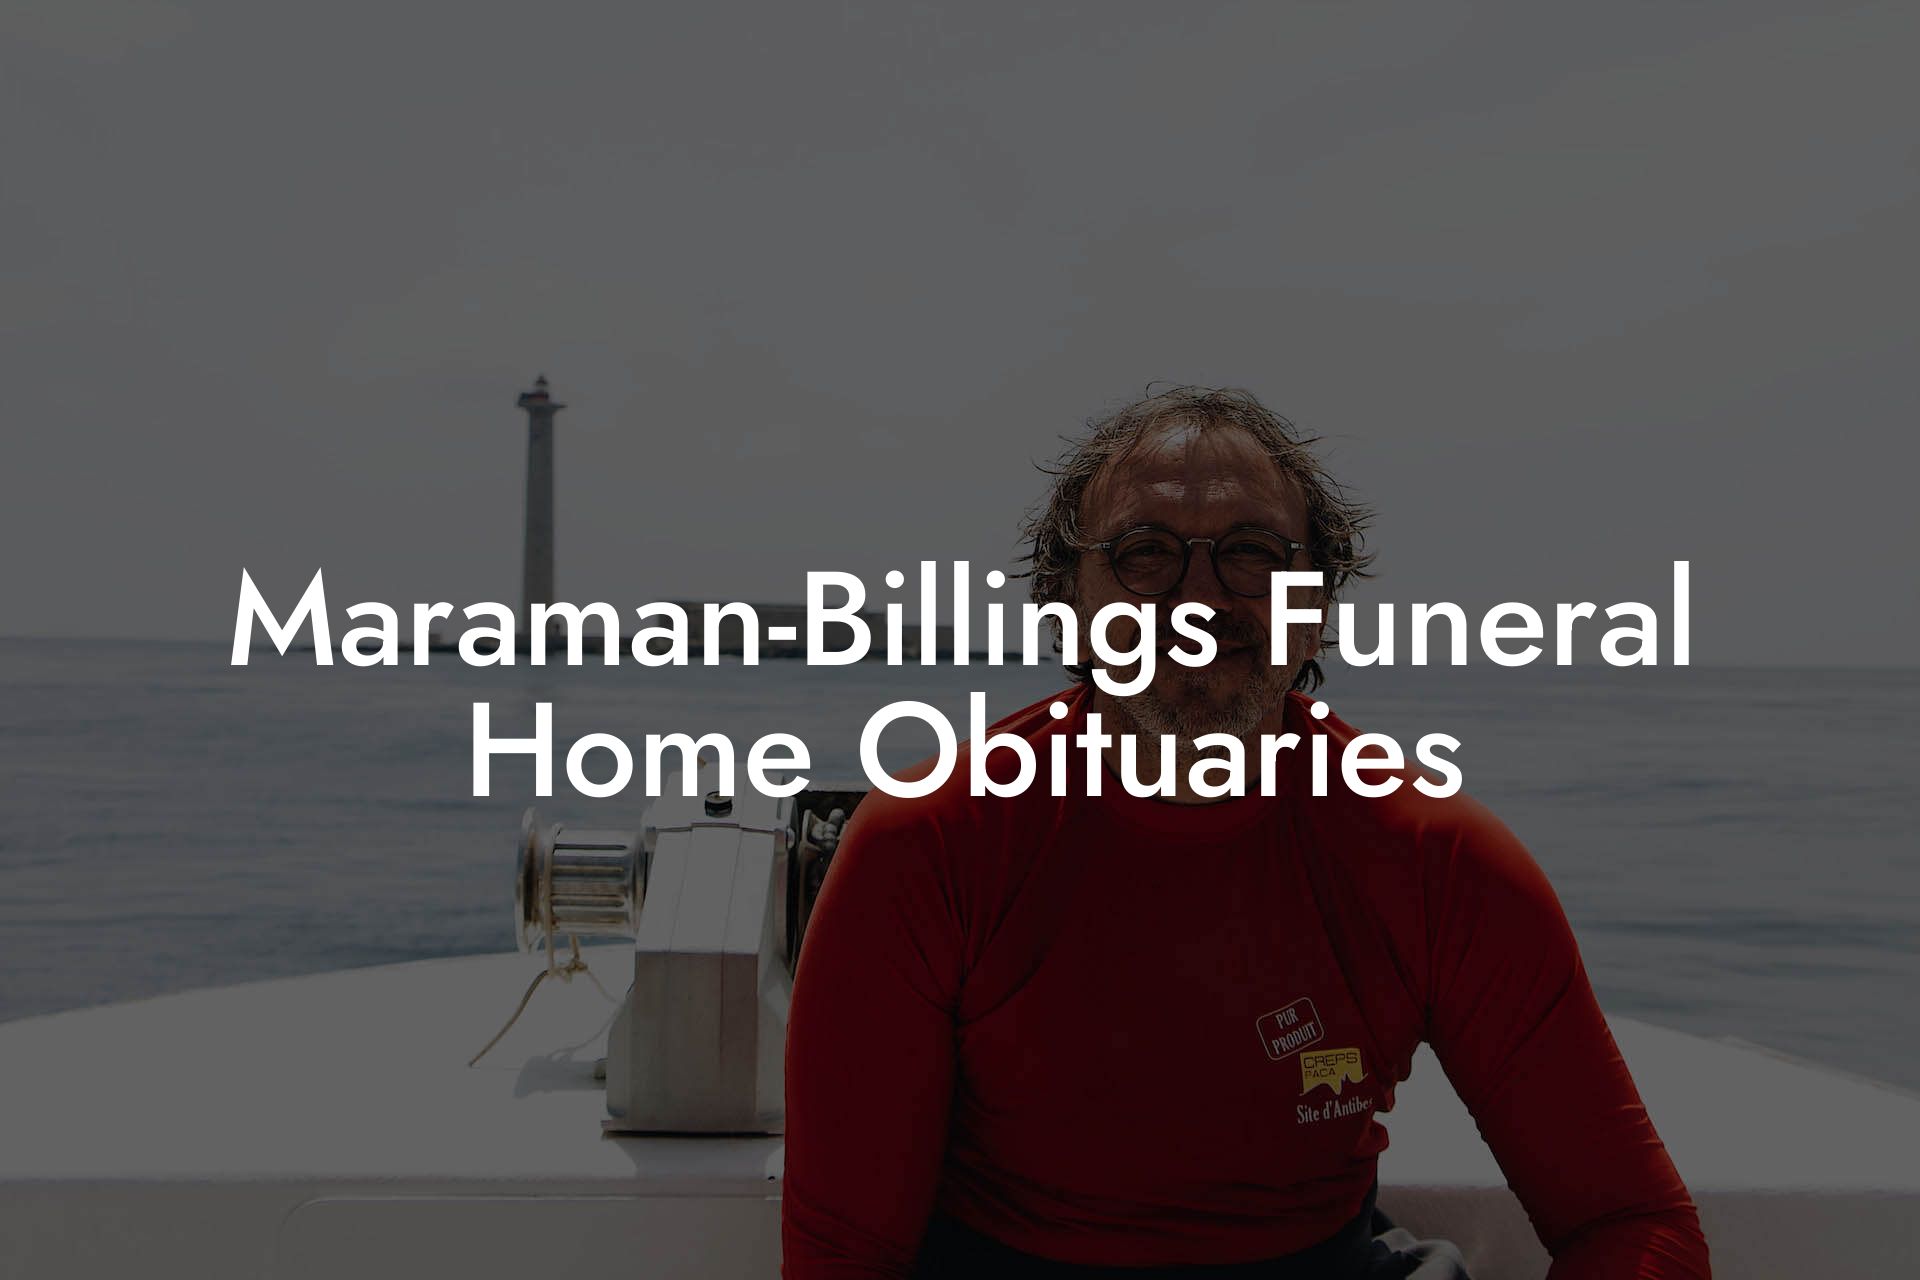 Maraman-Billings Funeral Home Obituaries